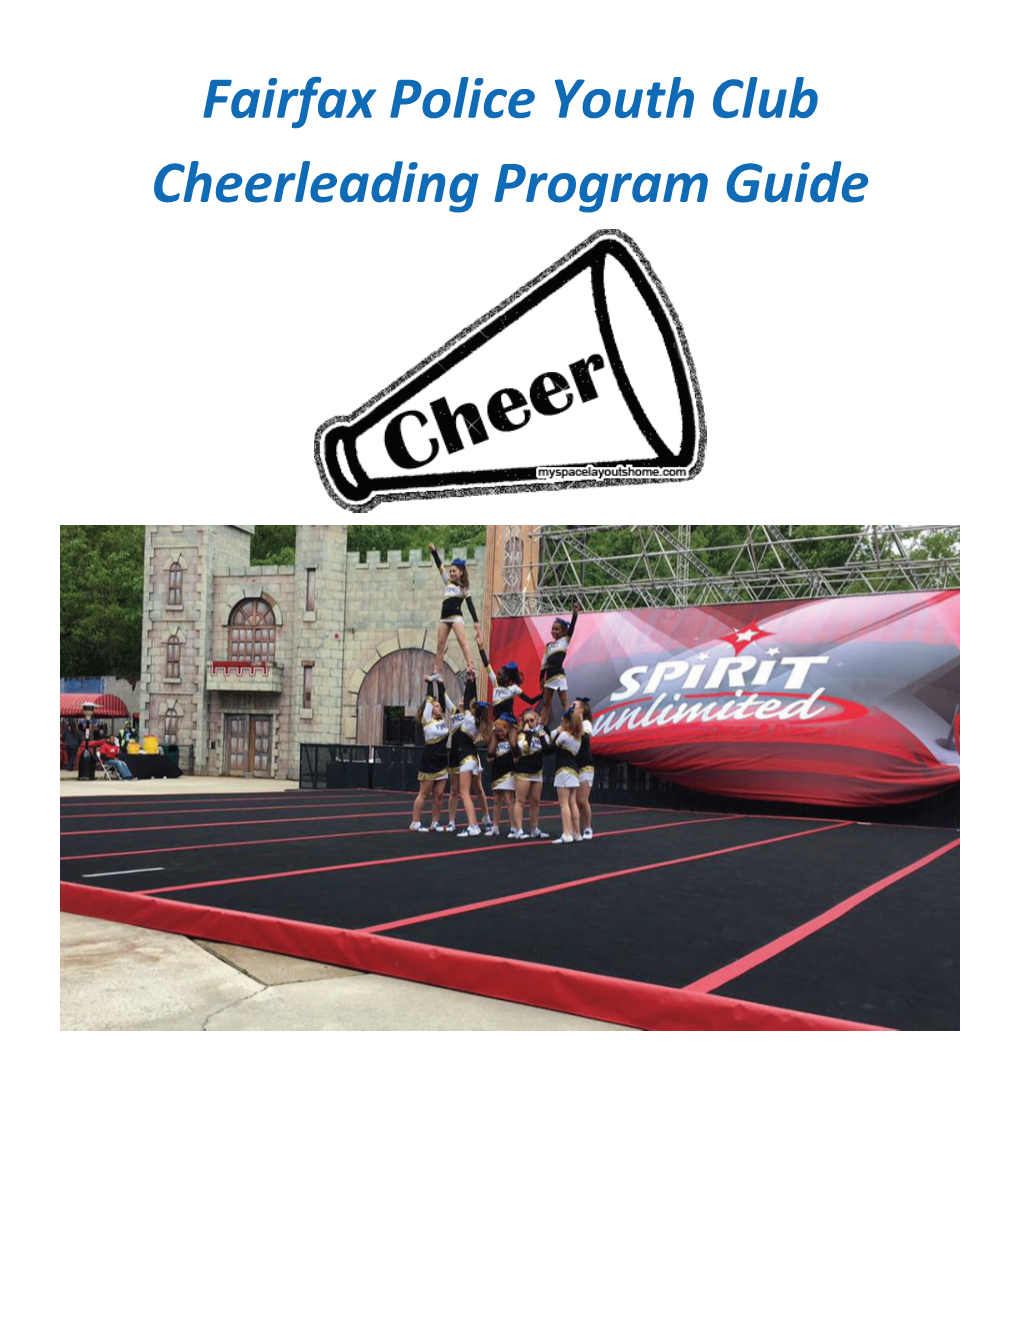 Fairfax Police Youth Club Cheerleading Program Guide